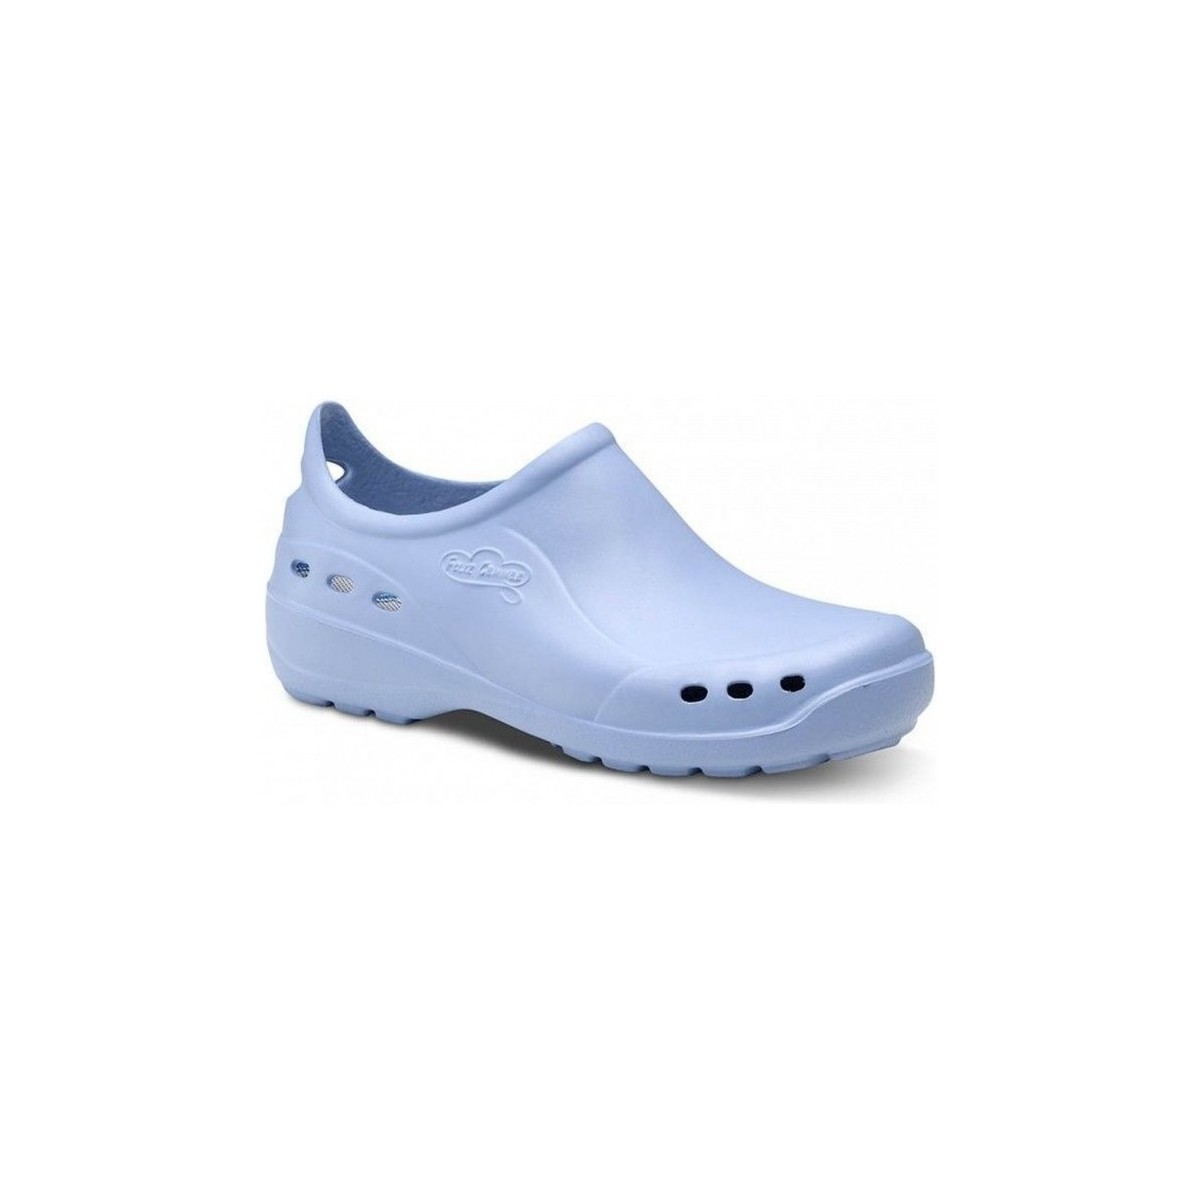 Cipők Munkavédelmi cipők Feliz Caminar ZAPATO SANITARIO UNISEX FLOTANTES SHOES Kék